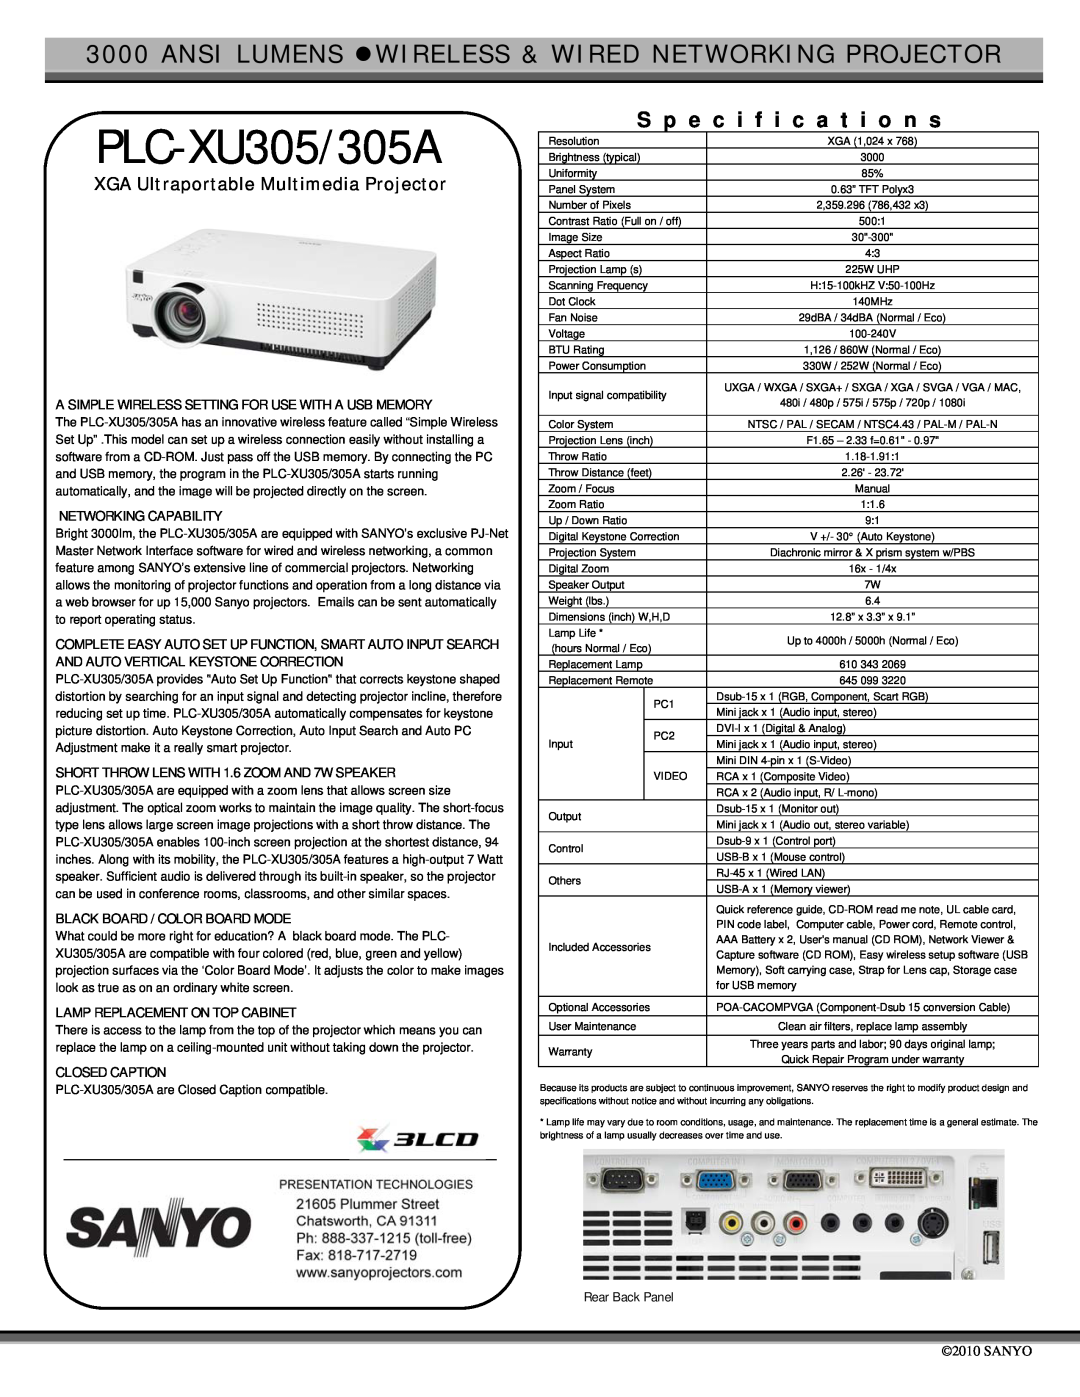 Sanyo specifications PLC-XU305/305A, S p e c i f i c a t i o n s, XGA Ultraportable Multimedia Projector 